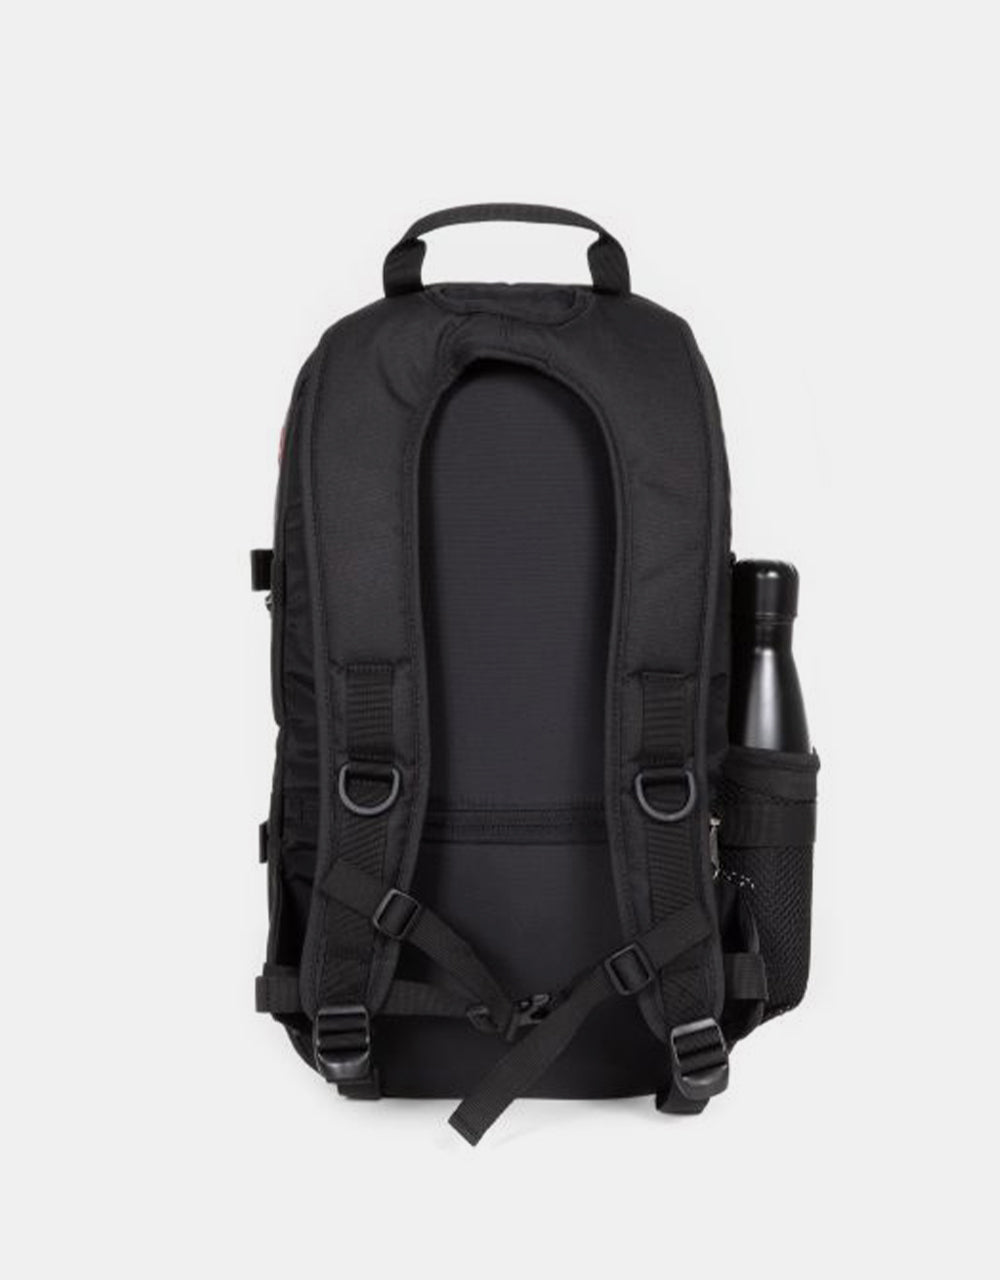 Eastpak Floid Backpack - CS Explore Black